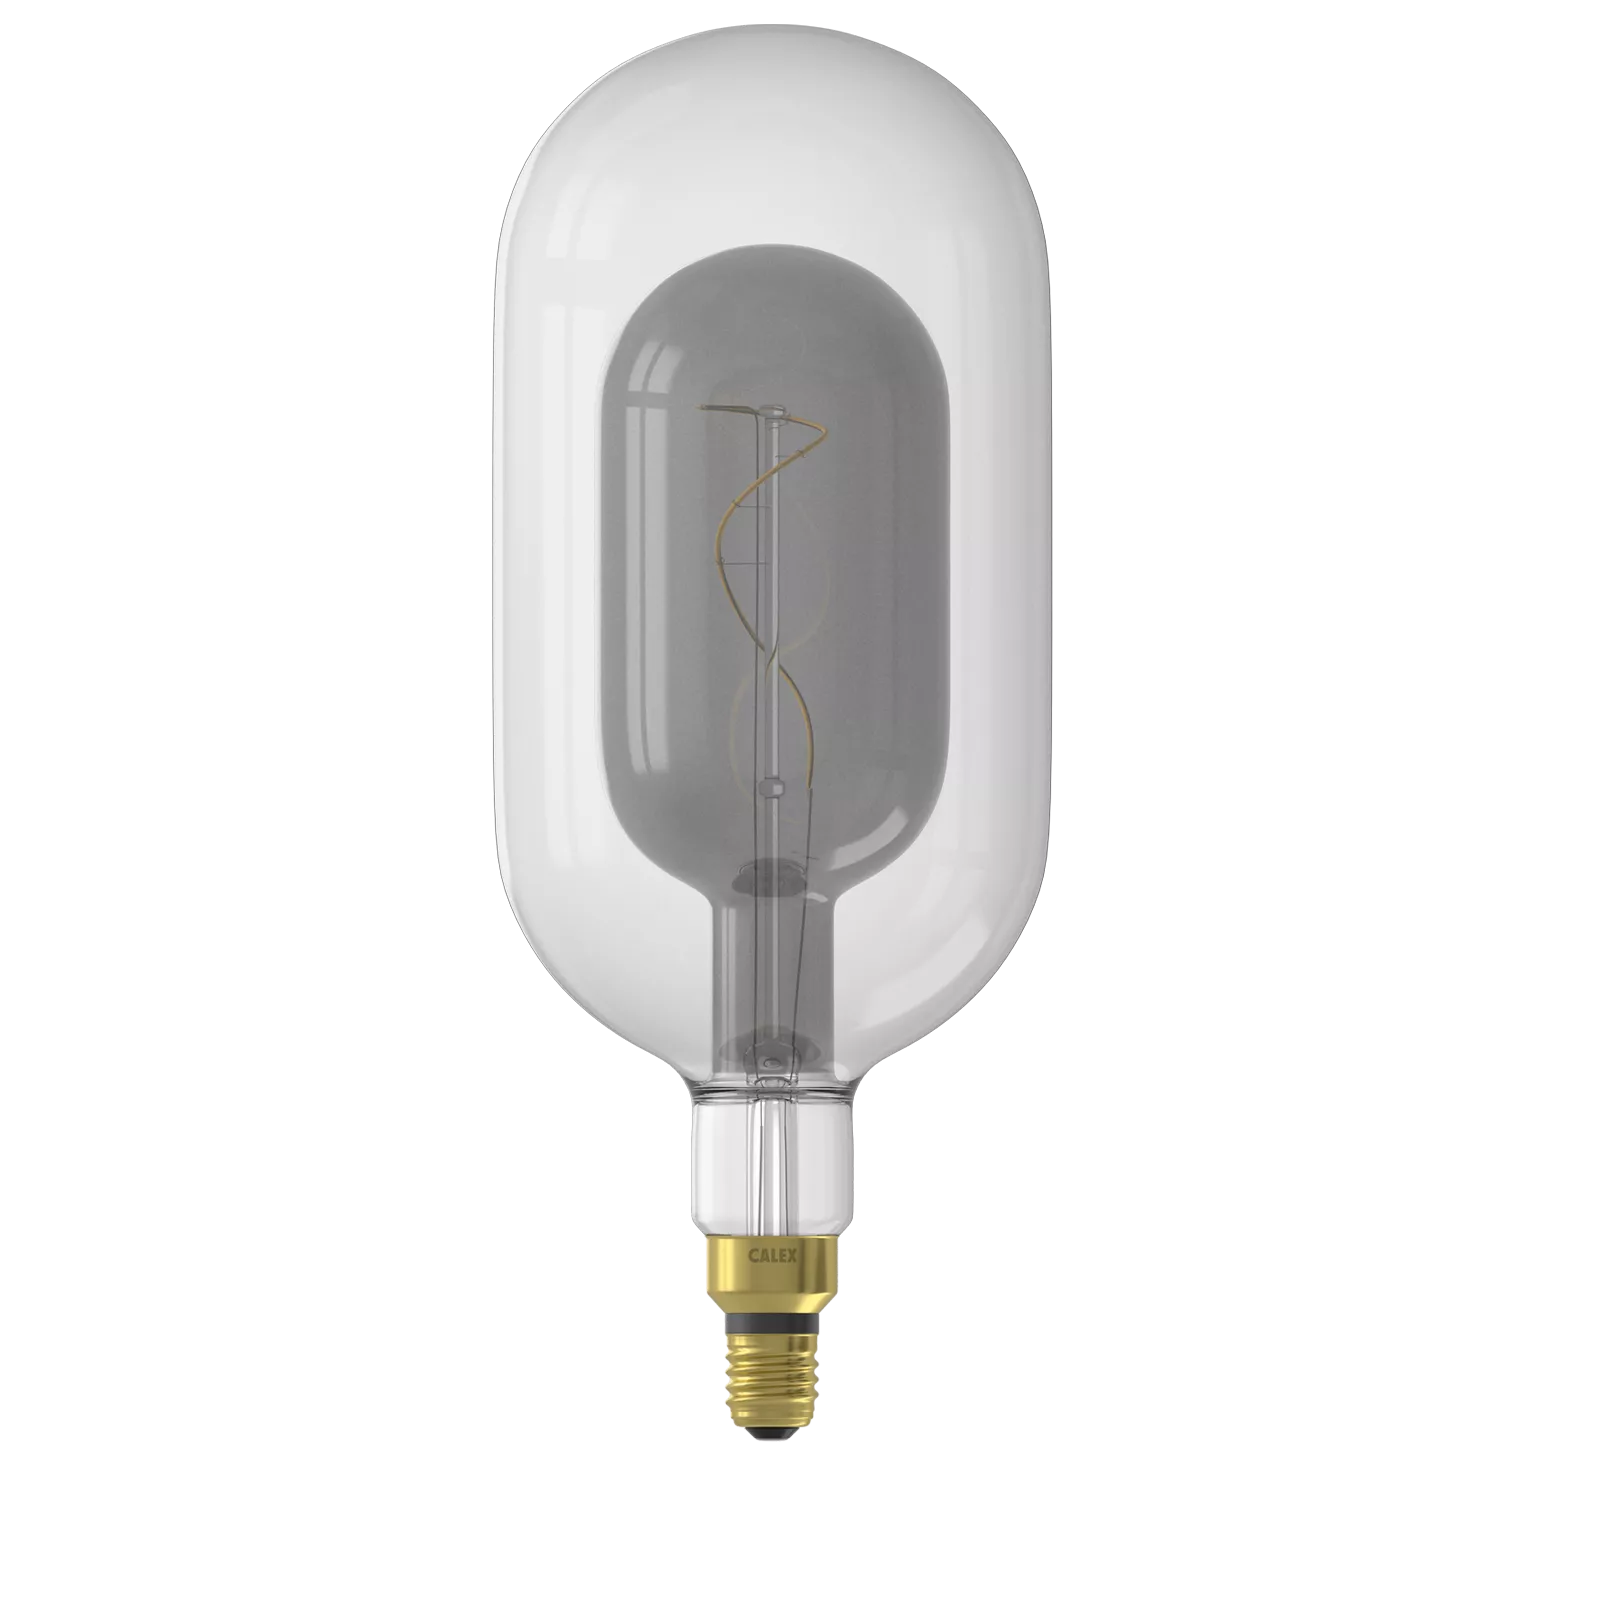 LED lamp Sundsvall - Titanium